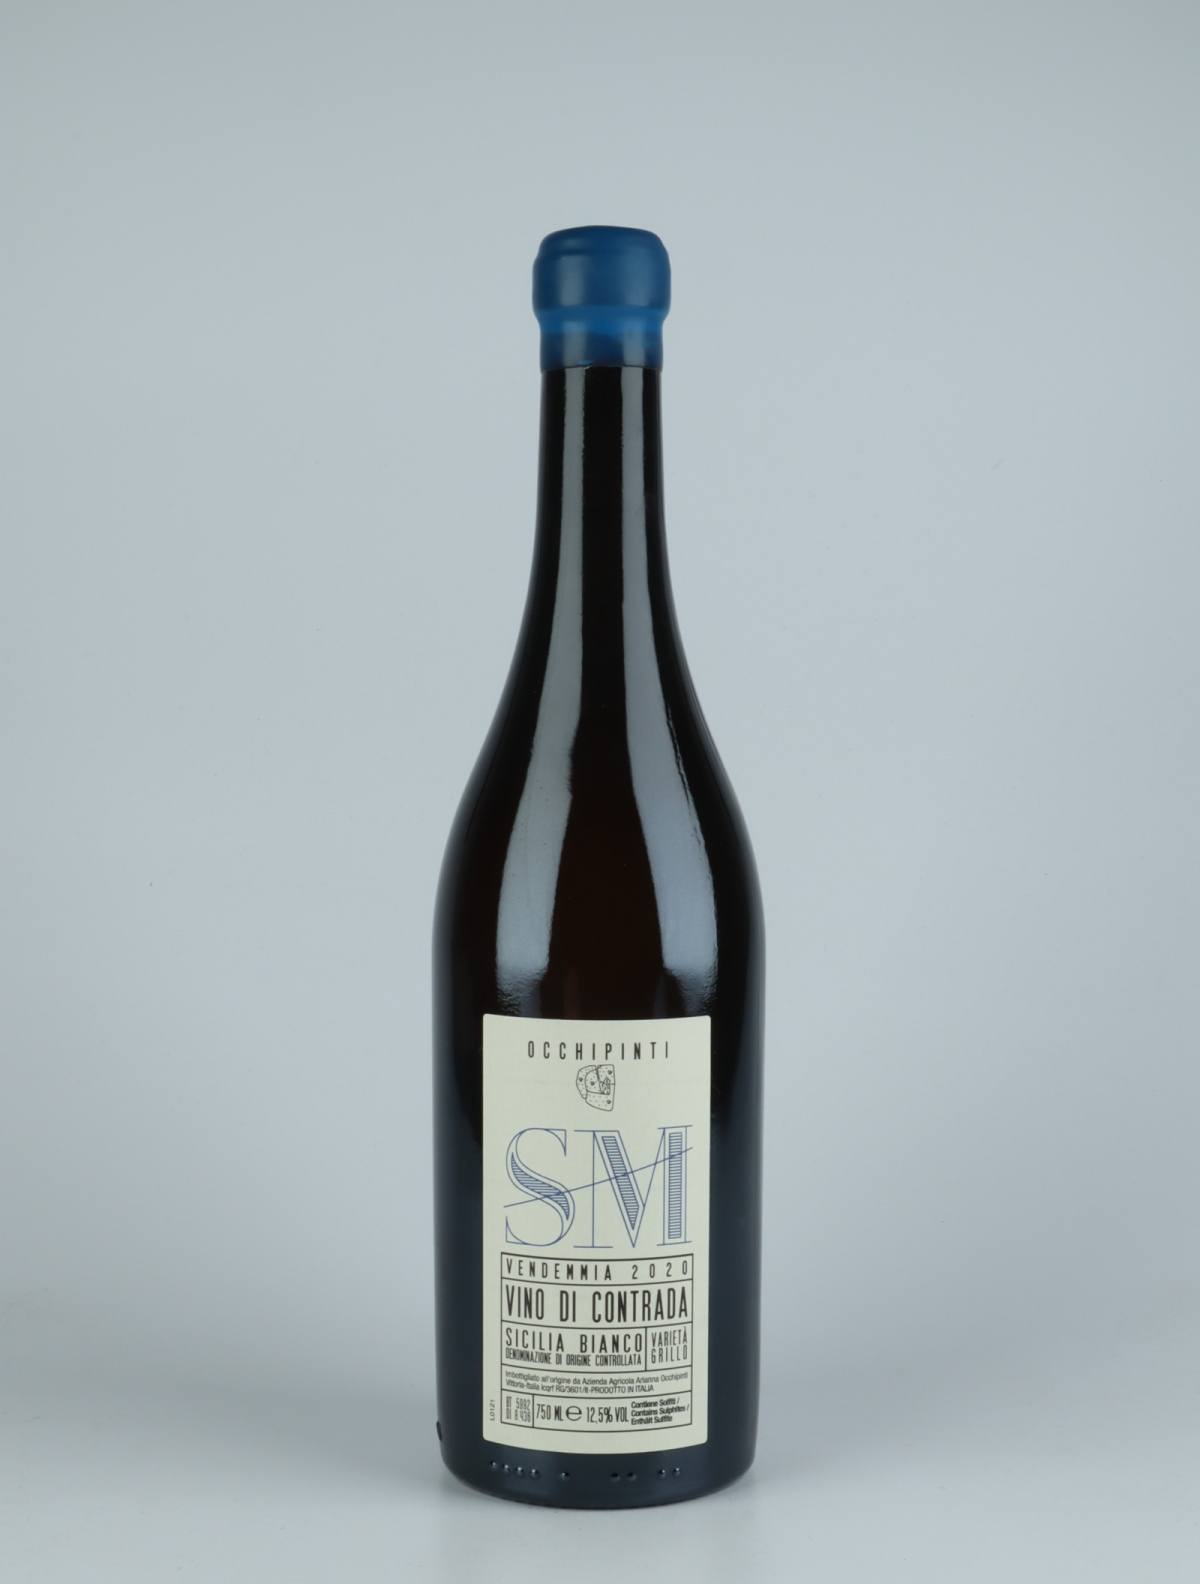 A bottle 2020 Santa Margherita White wine from Arianna Occhipinti, Sicily in Italy